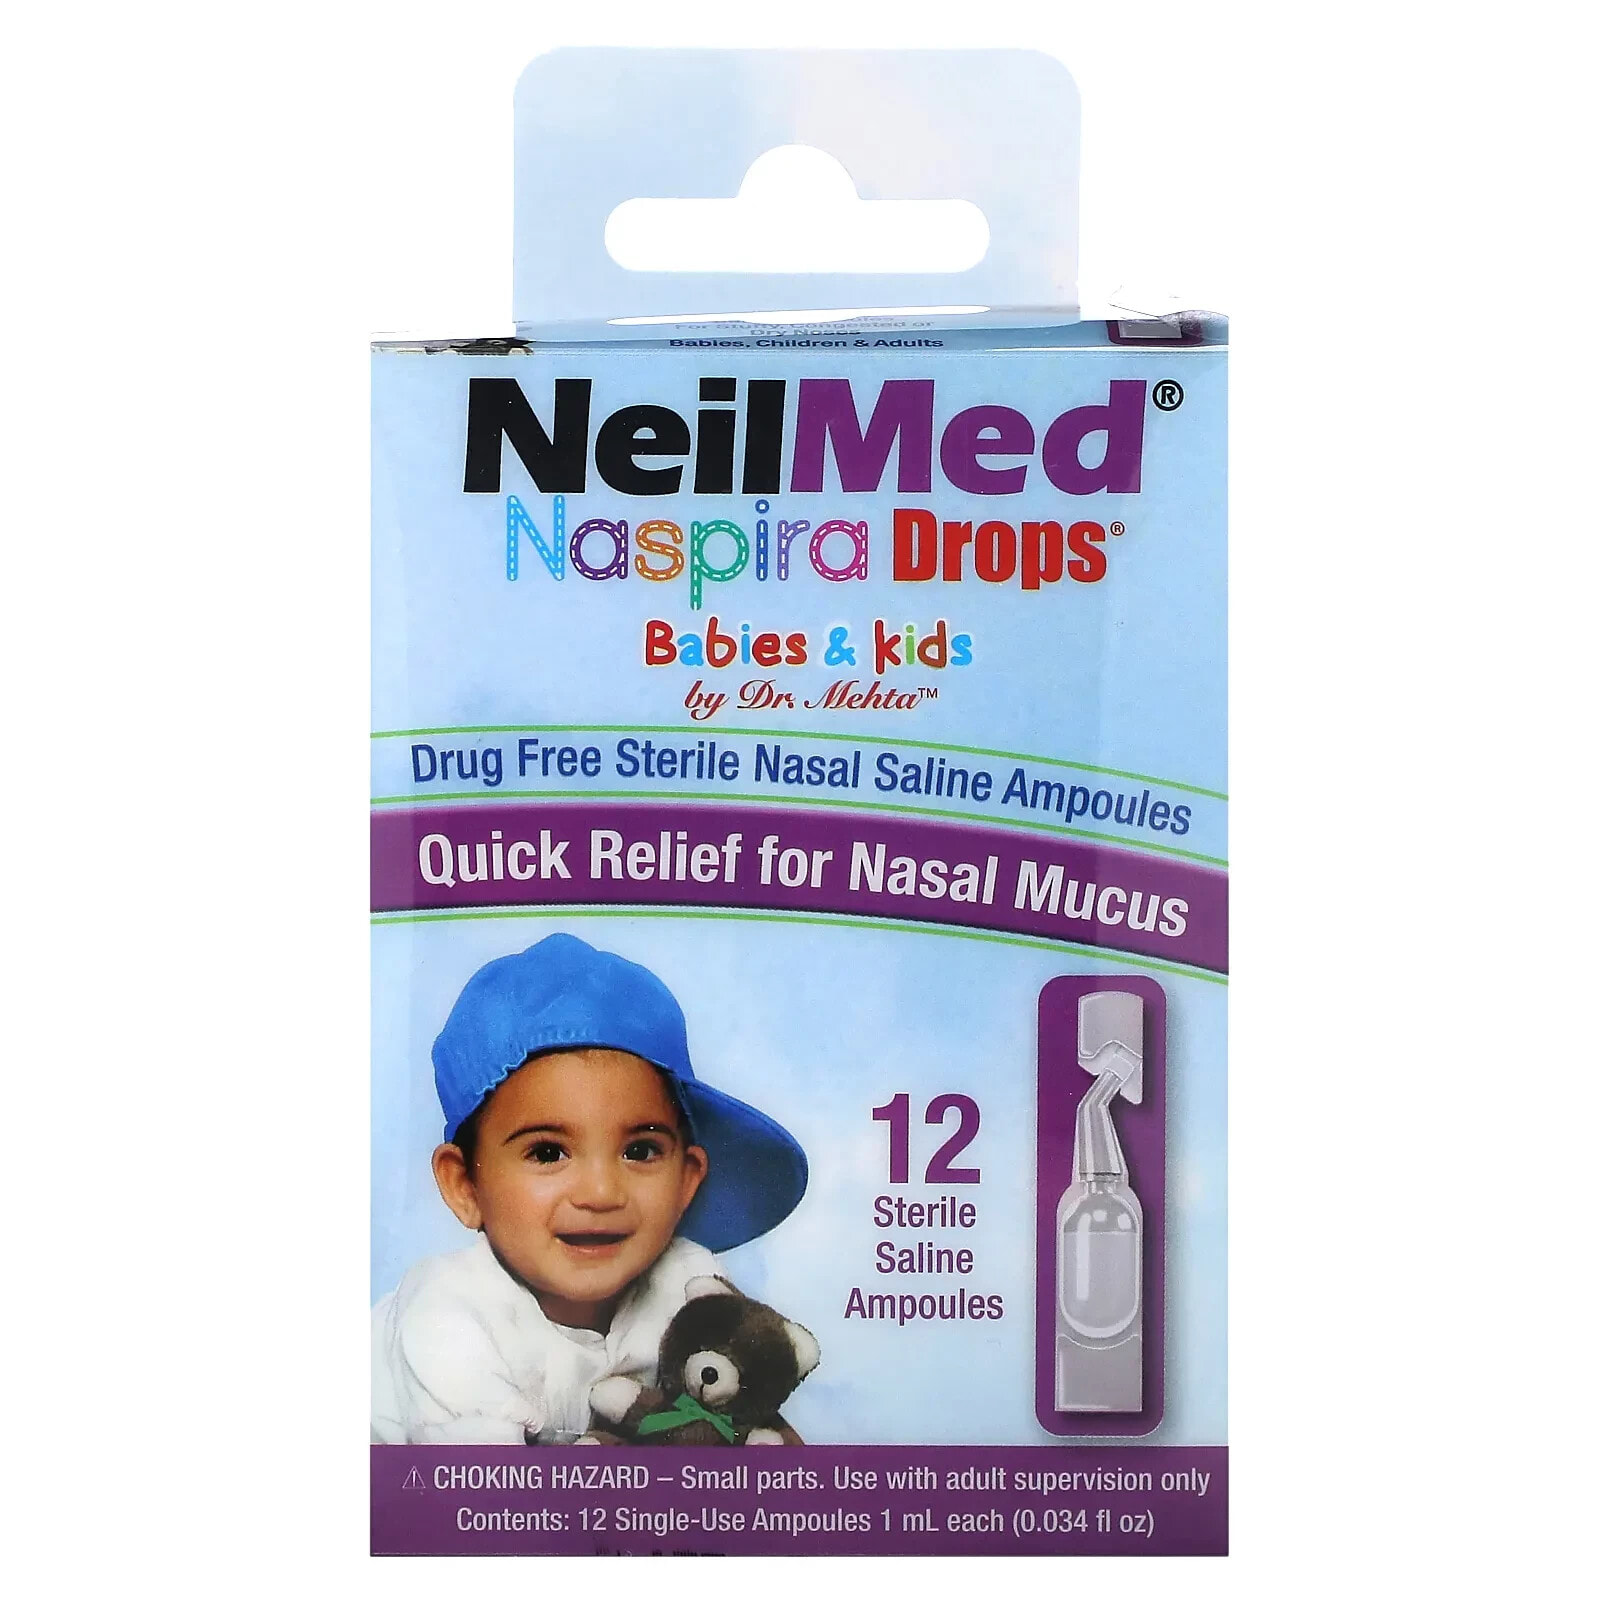 NeilMed, Babies & Kids, Naspira Drops, 12 Sterile Saline Ampoules, 0.034 fl oz (1 ml) Each